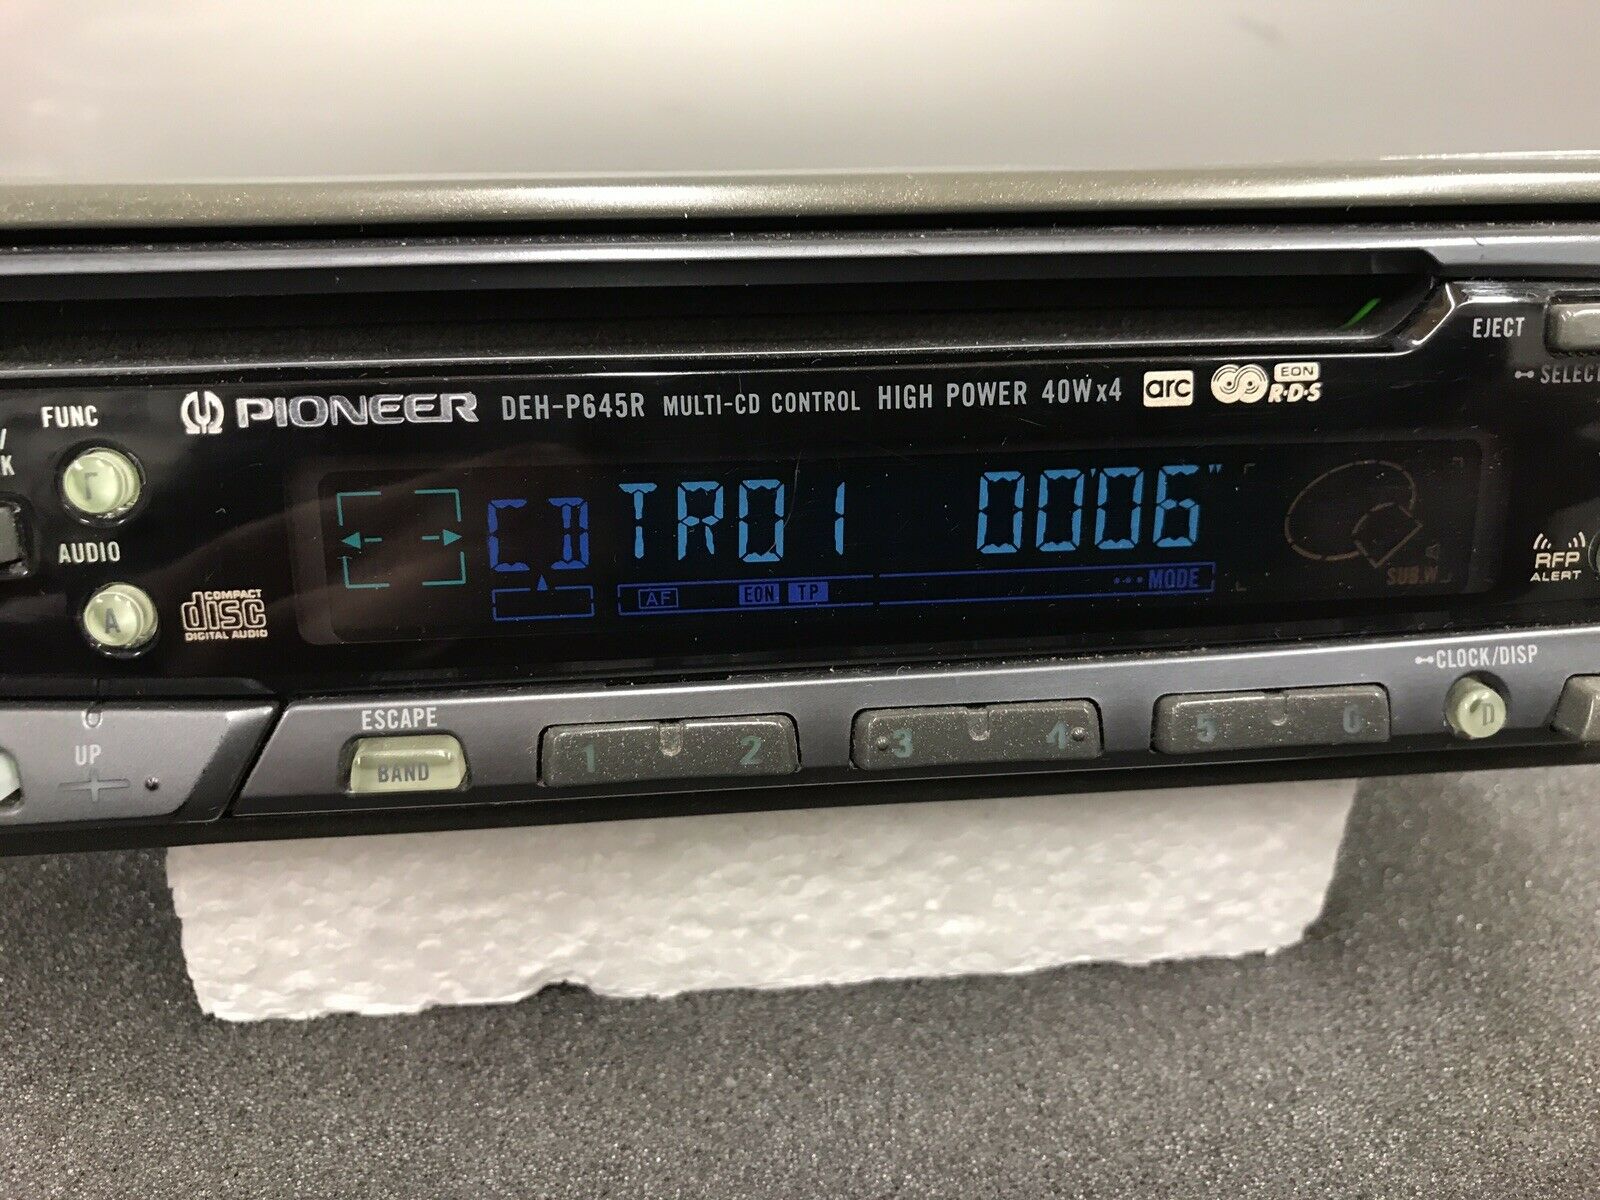 Old Pioneer Car Radio Stereo Cd Player Model Deh-P645r Retro 90s Vintage Retro